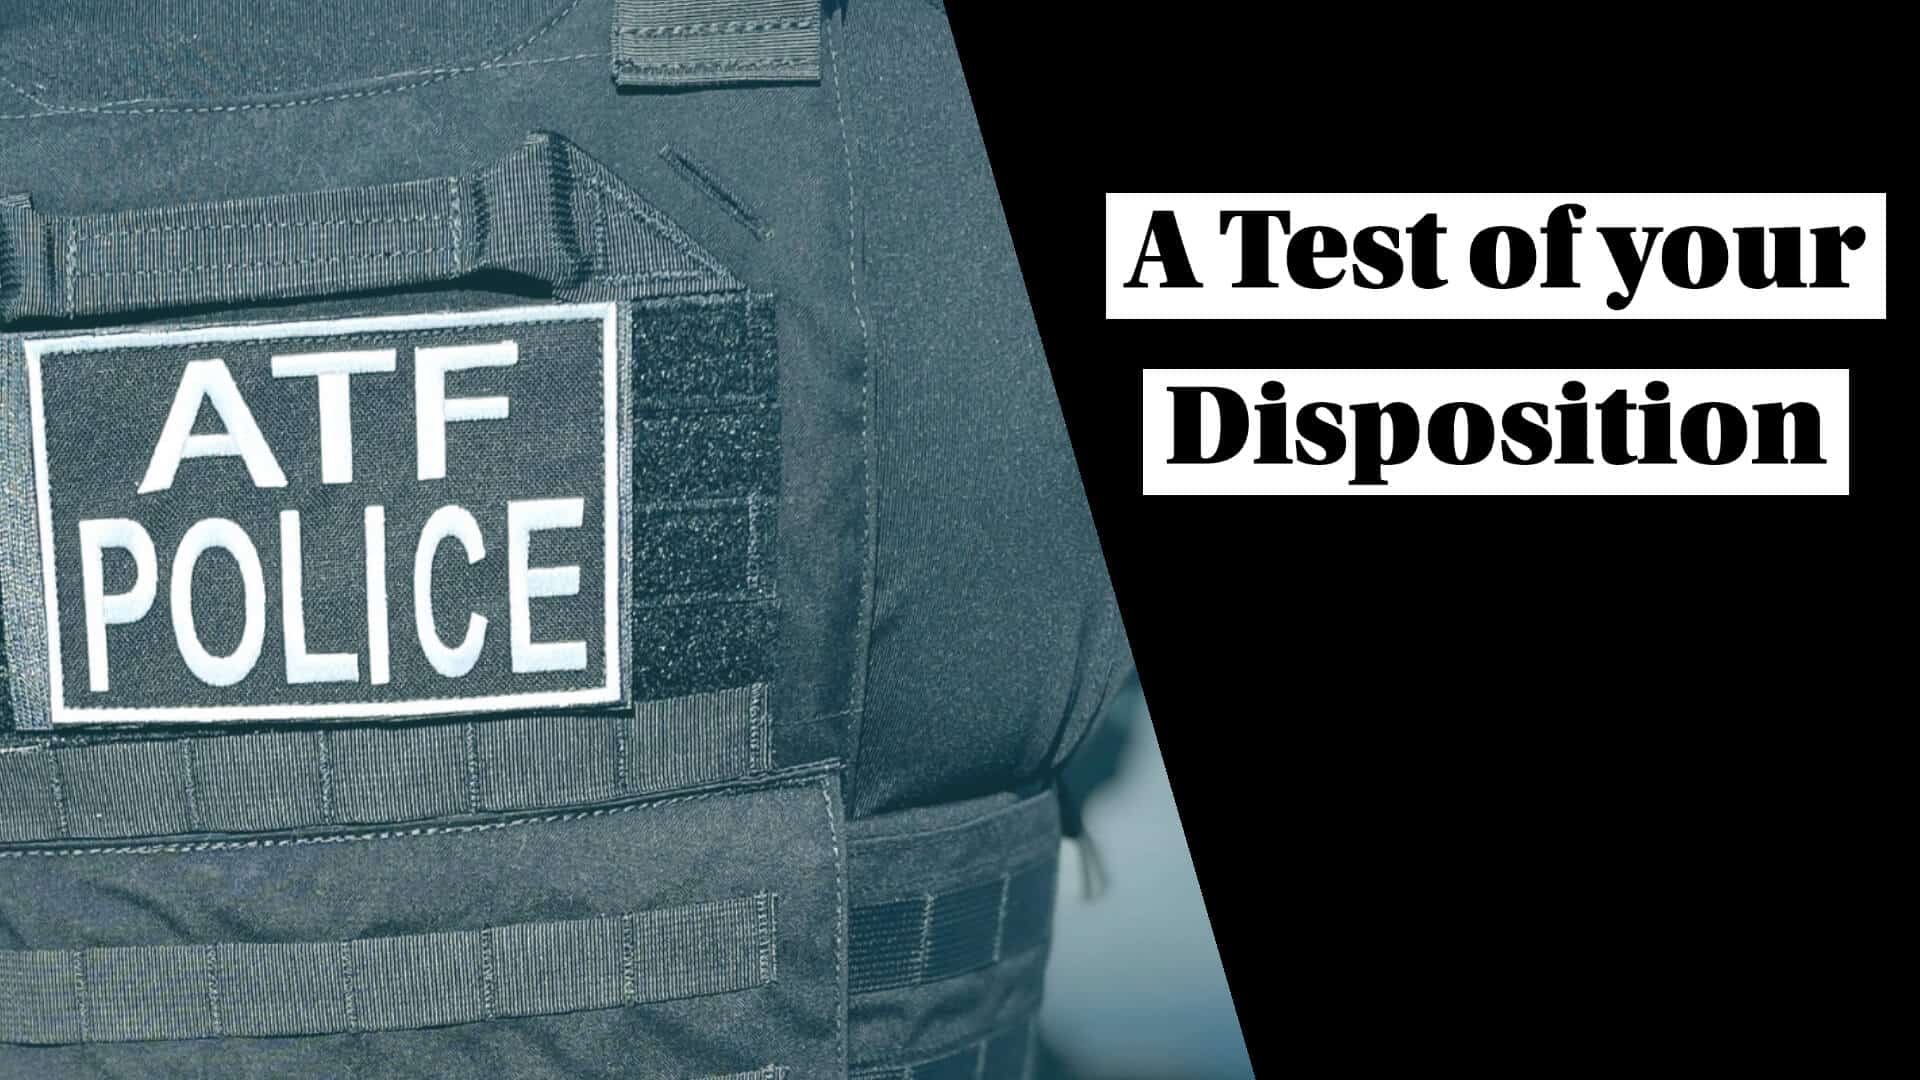 Pistol Brace Rule: A Test of your Disposition